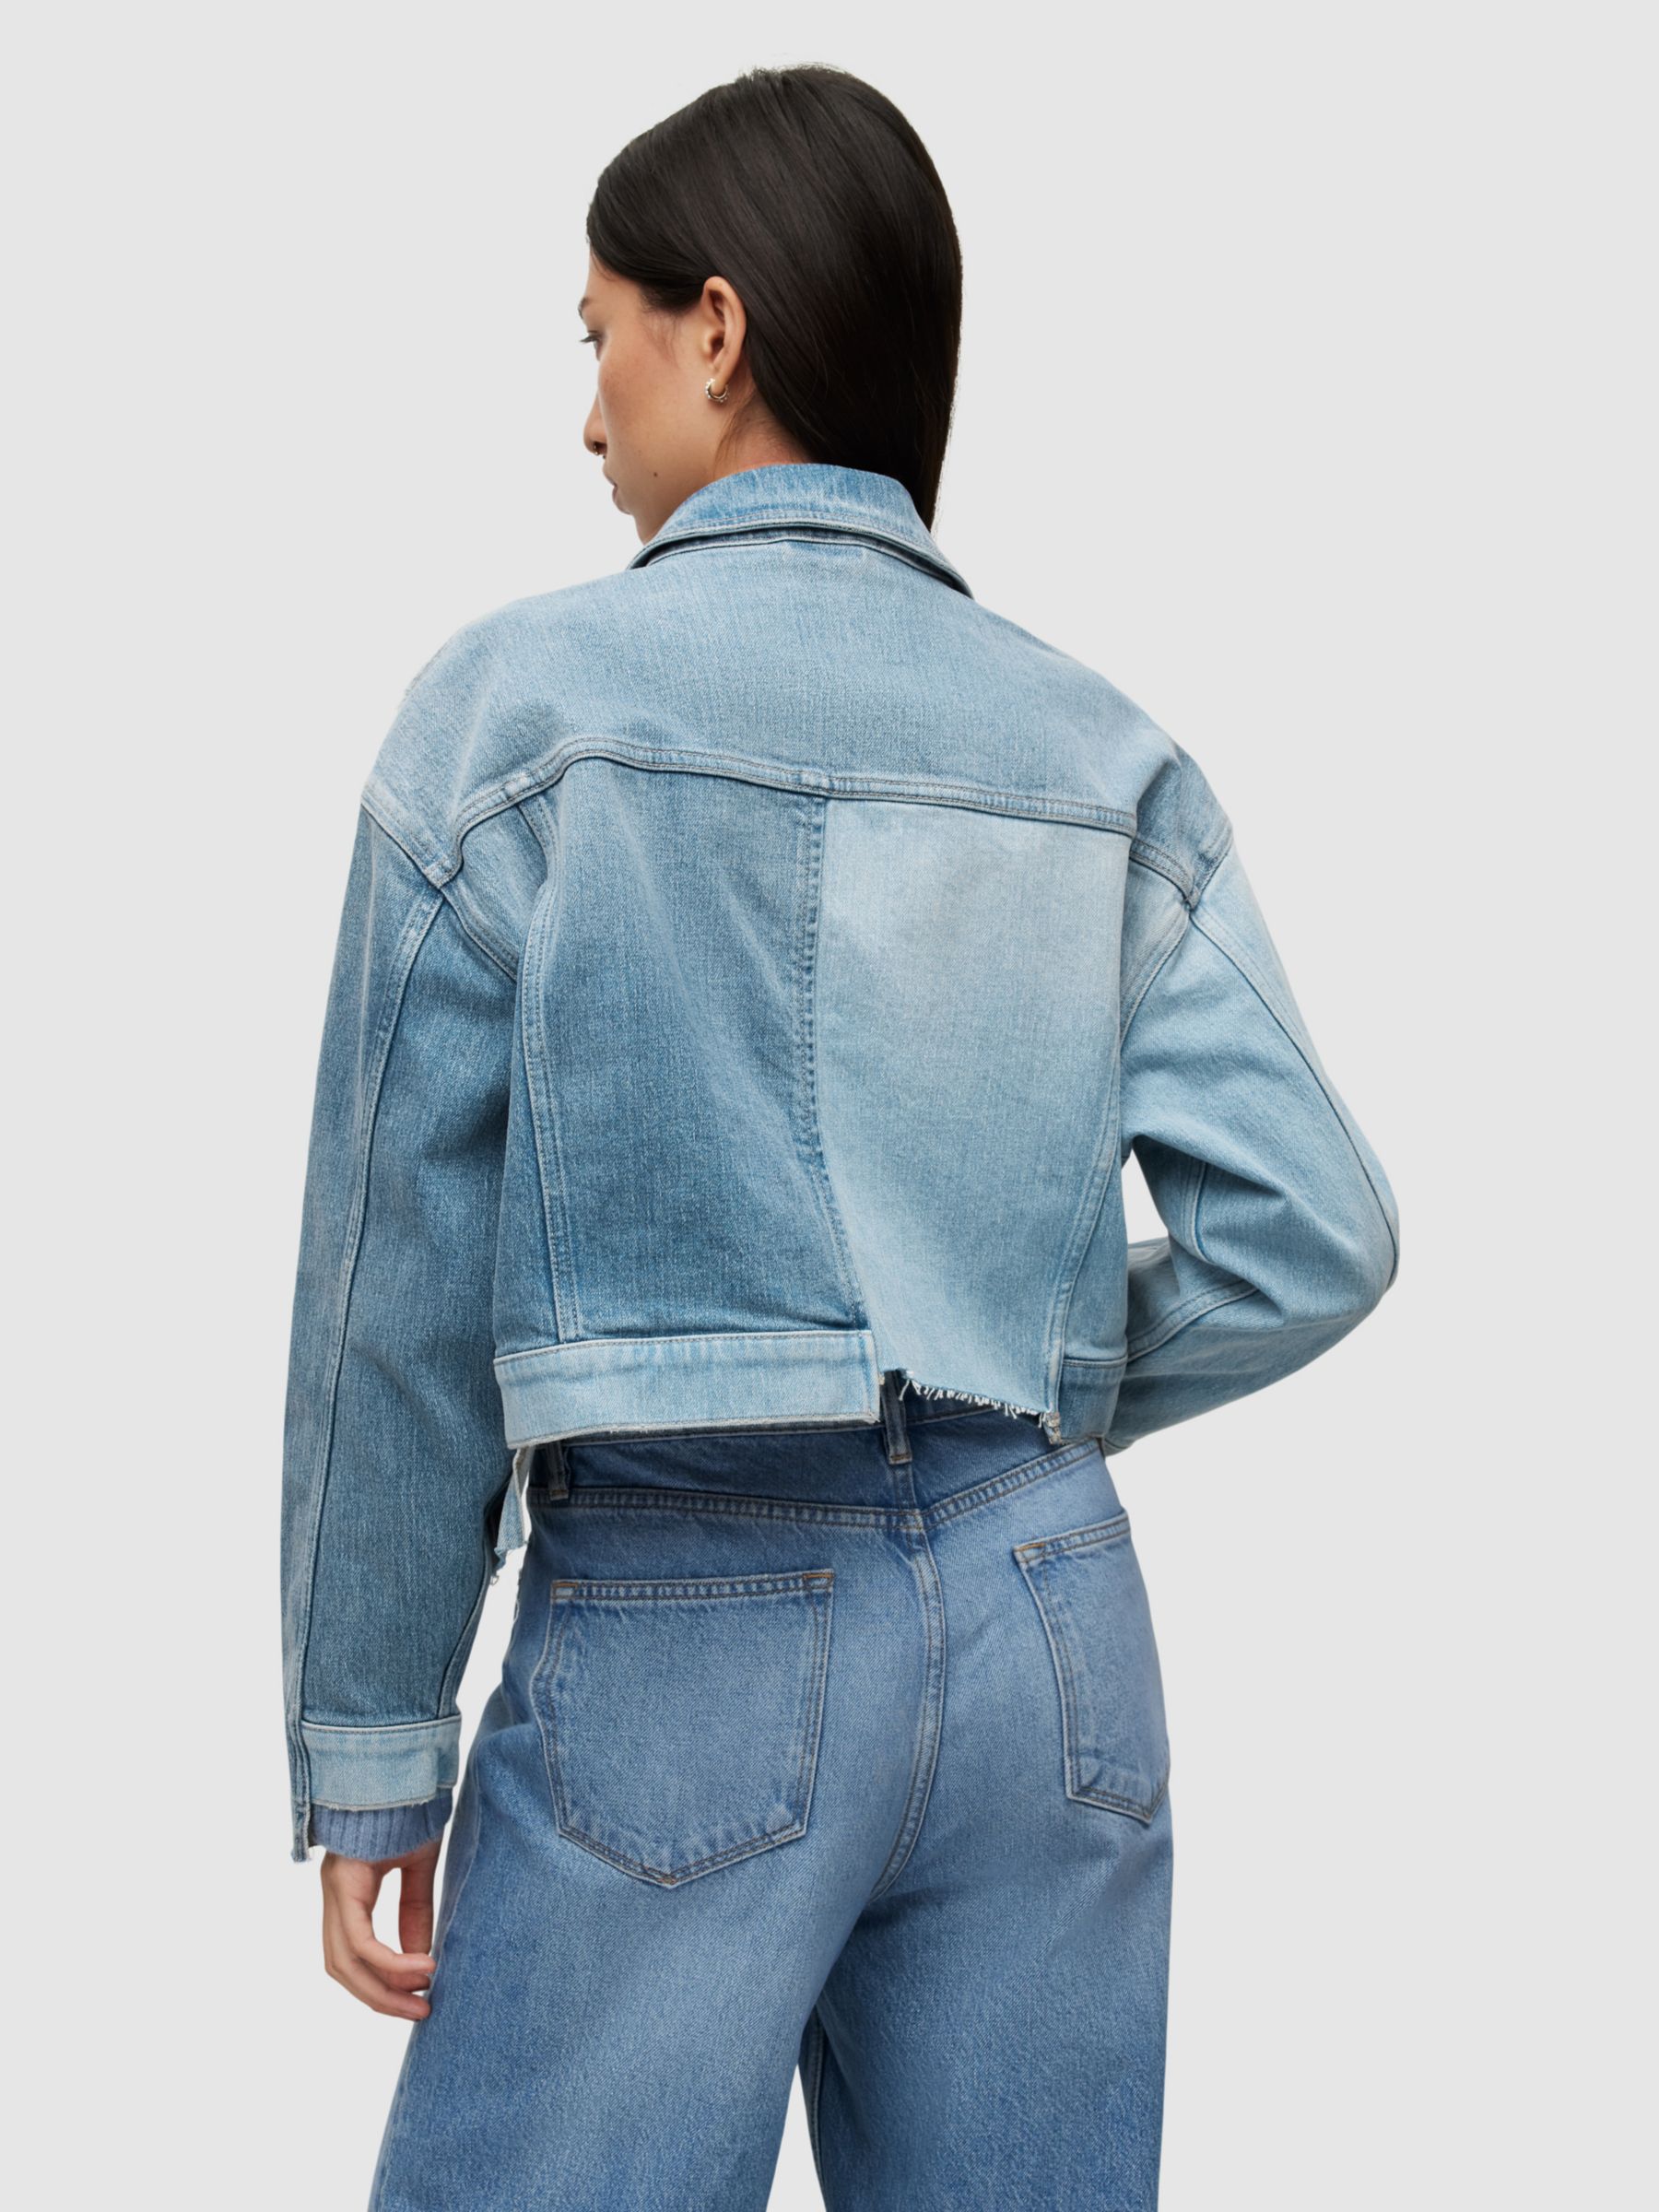 Pockets For Women - AllSaints Beth Patch Denim Jacket